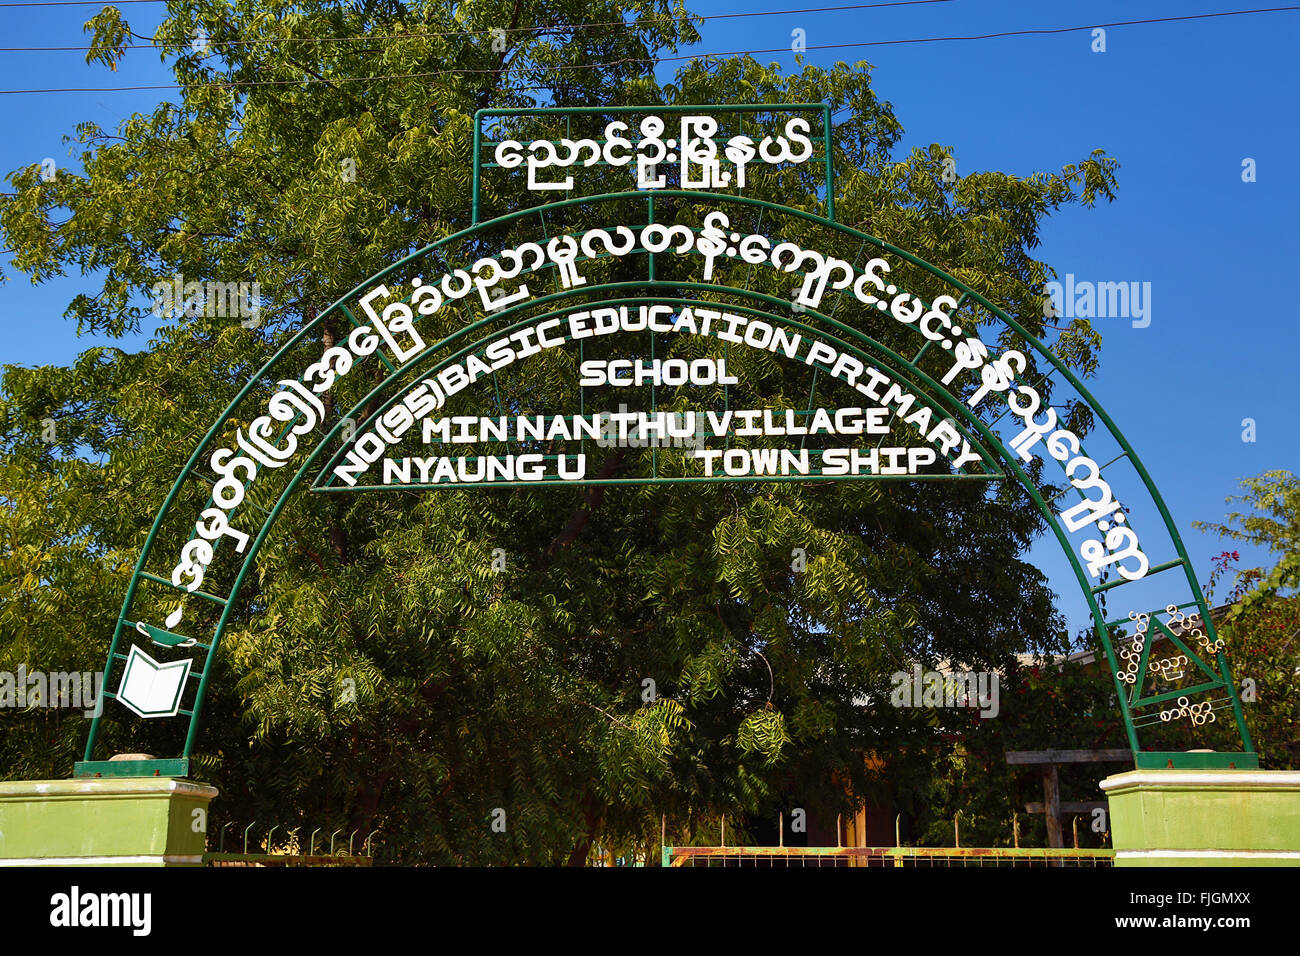 Min Nan Thu Village Primary School sign, Bagan, Myanmar (Burma) Stock Photo